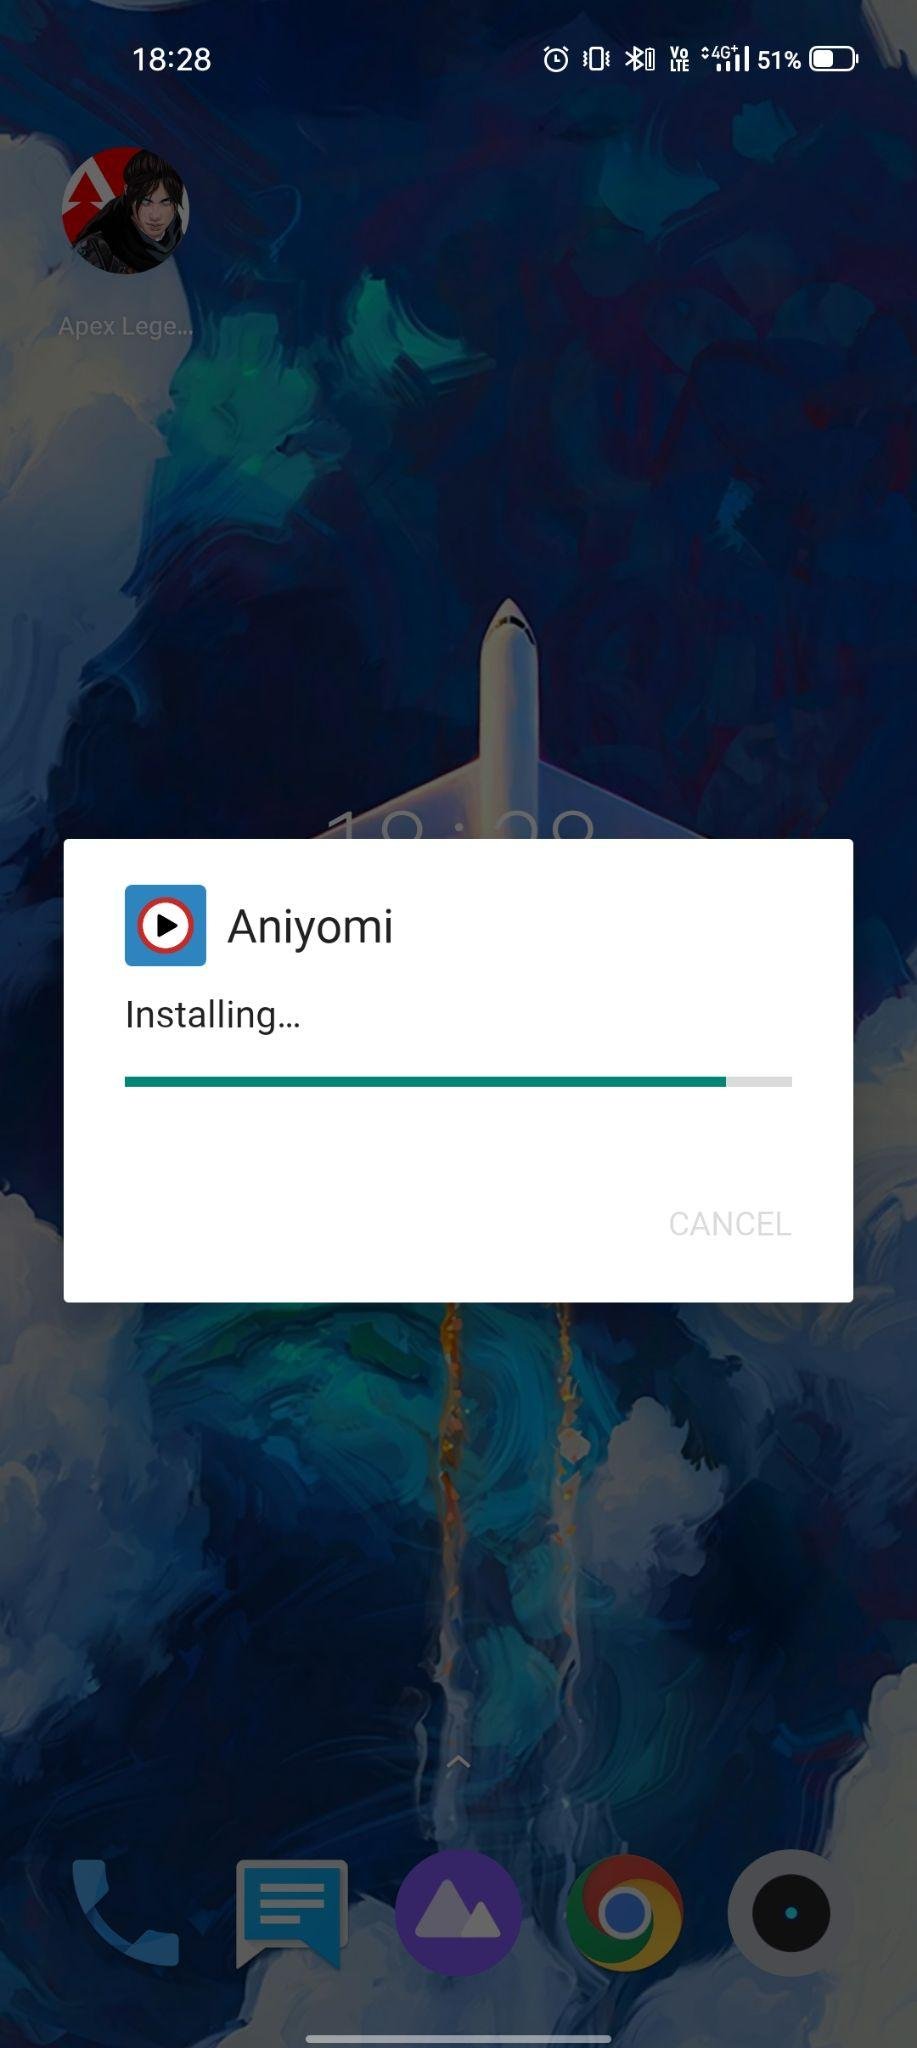 Aniyomi apk installing